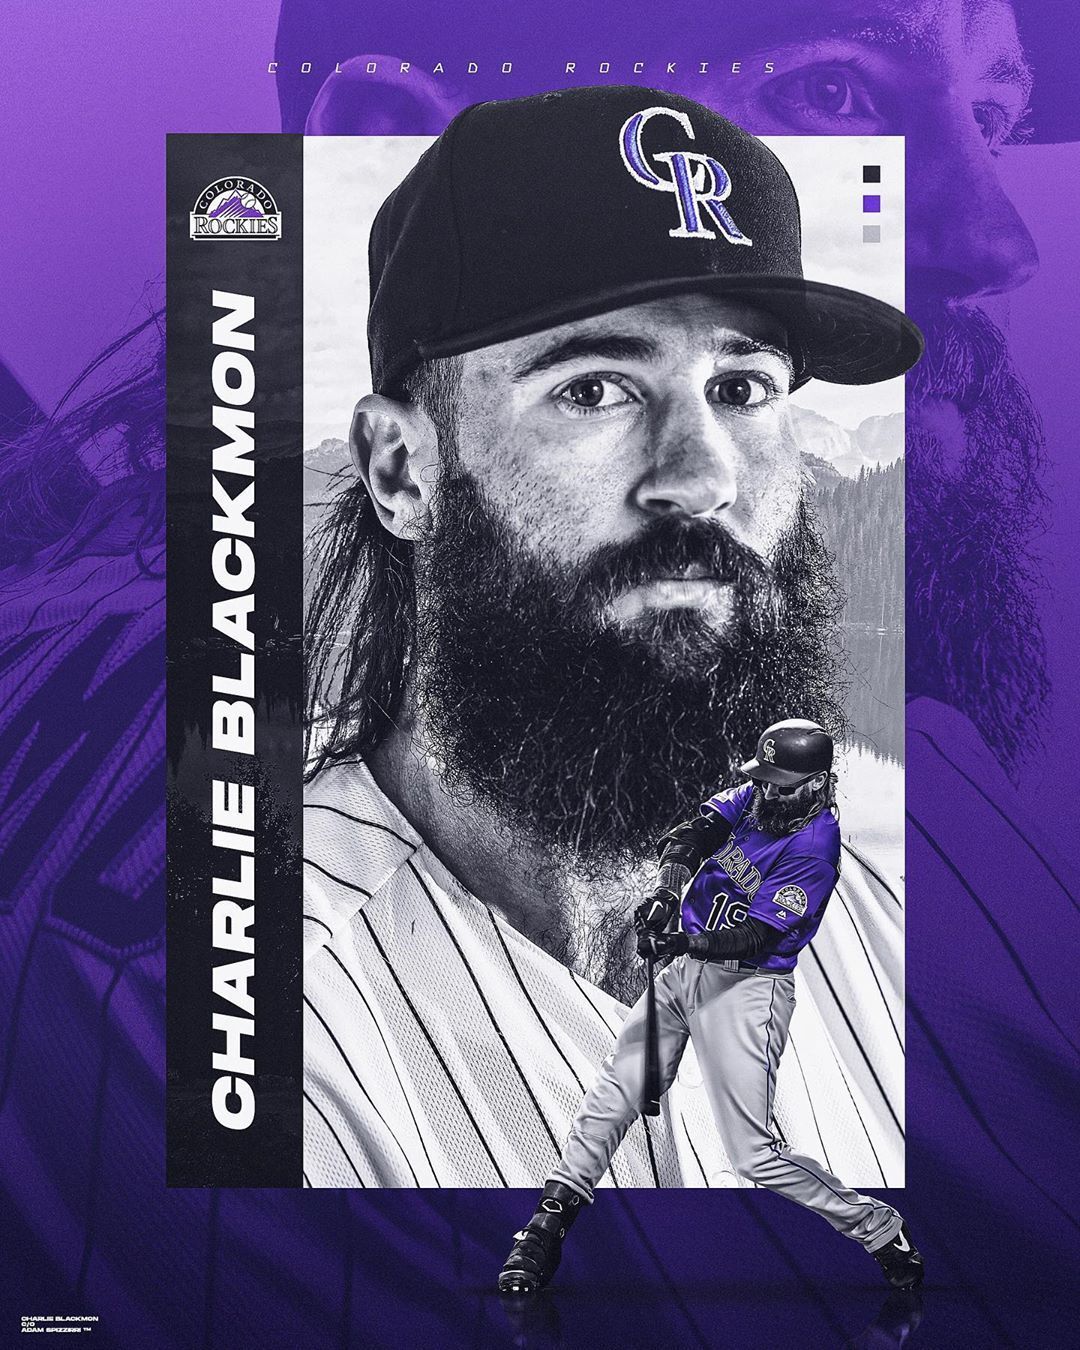 Adam Spizzirri on Instagram: “155 / Charlie Blackmon has been red hot to start the MLB season. He le. Baseball design, Sports graphic design, Batting average